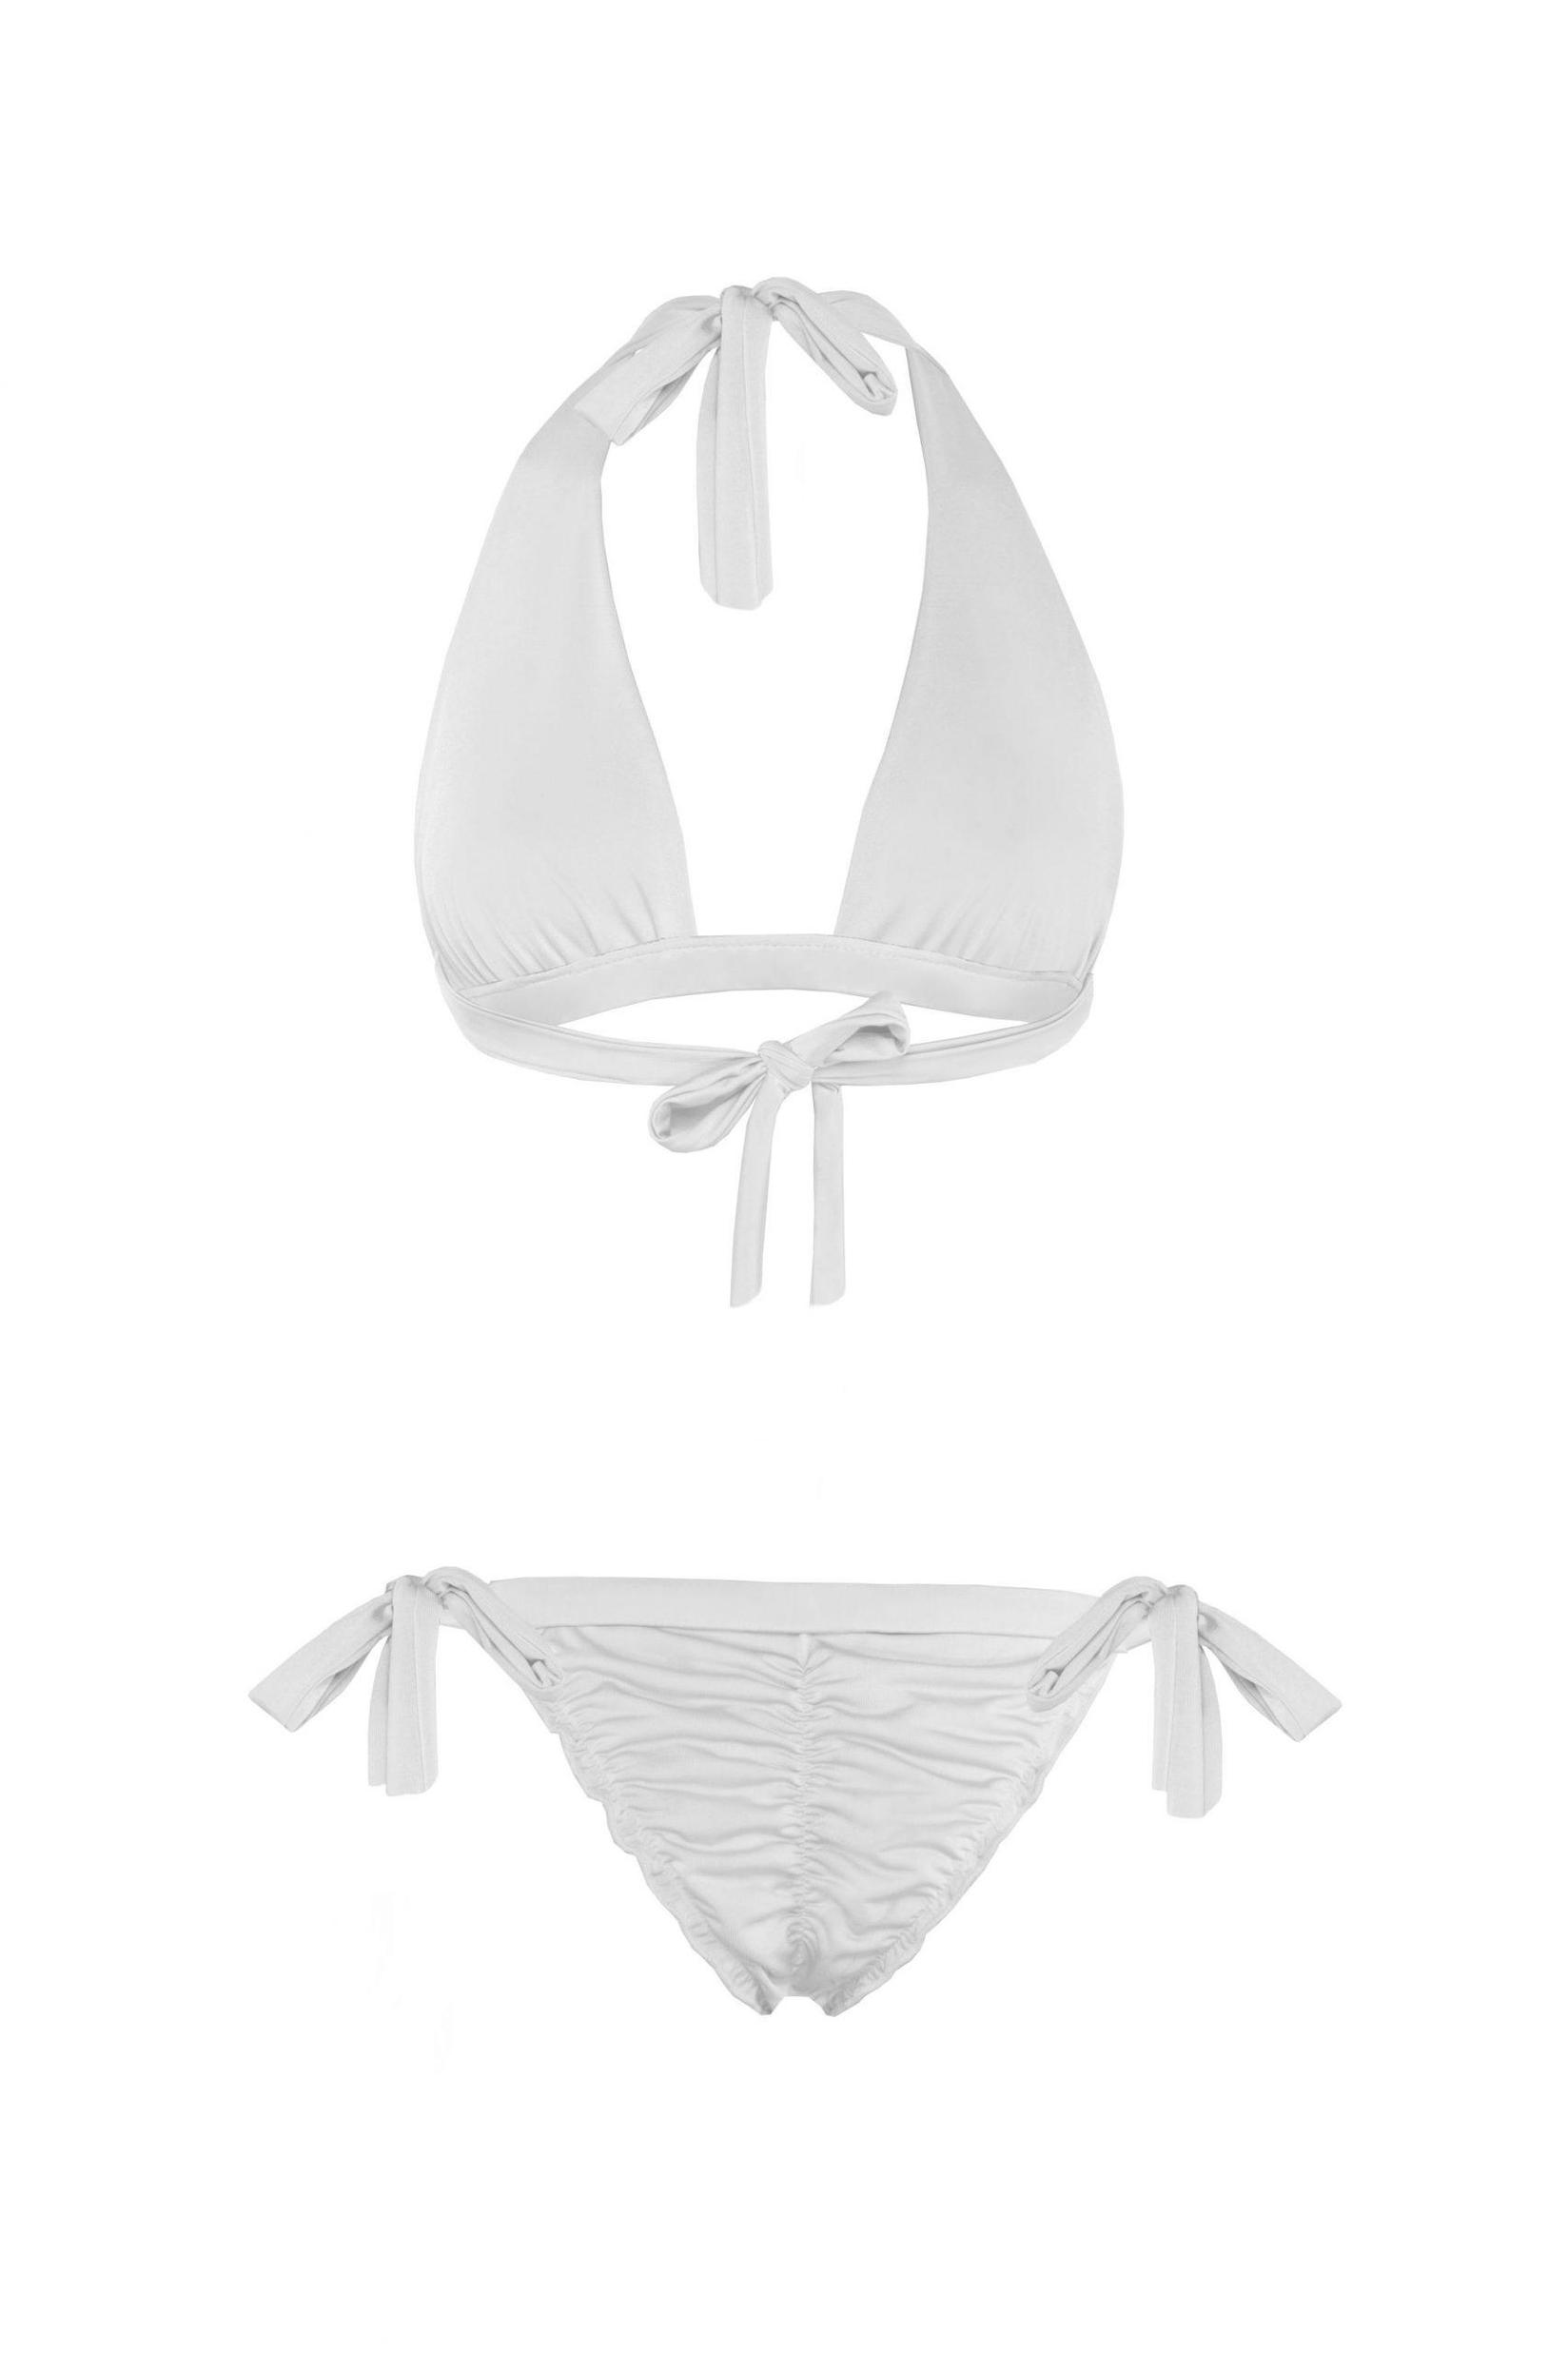 Selected image for DEVI COLLECTION Ženski dvodelni kupaći kostim Kasia beli